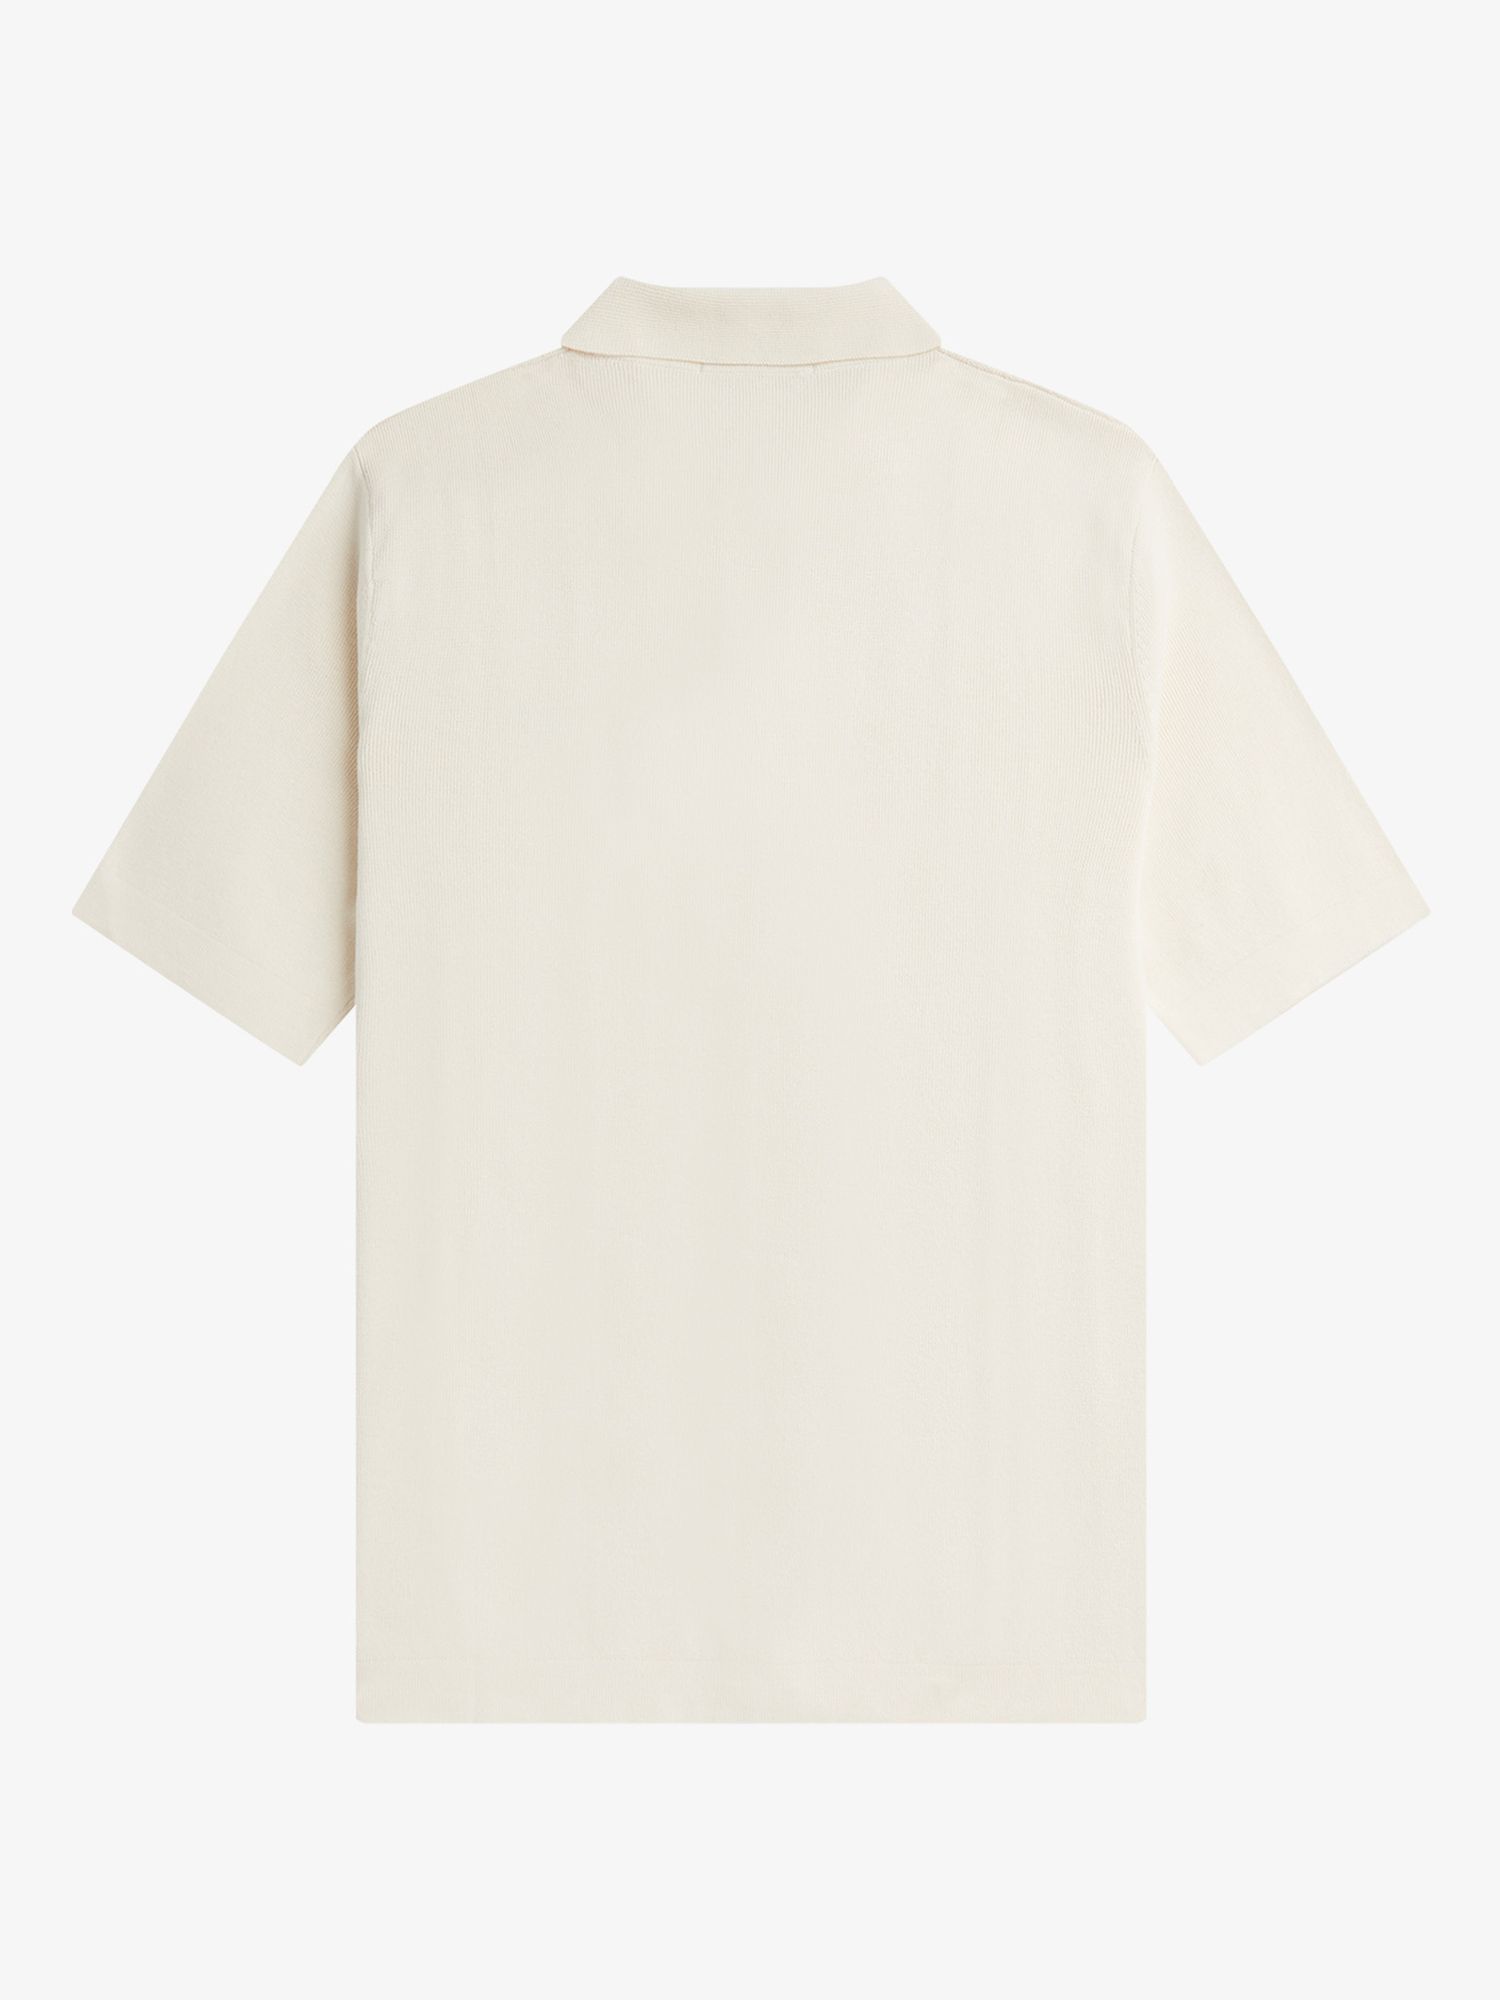 Fred Perry Button Knit Shirt, Ecru, M